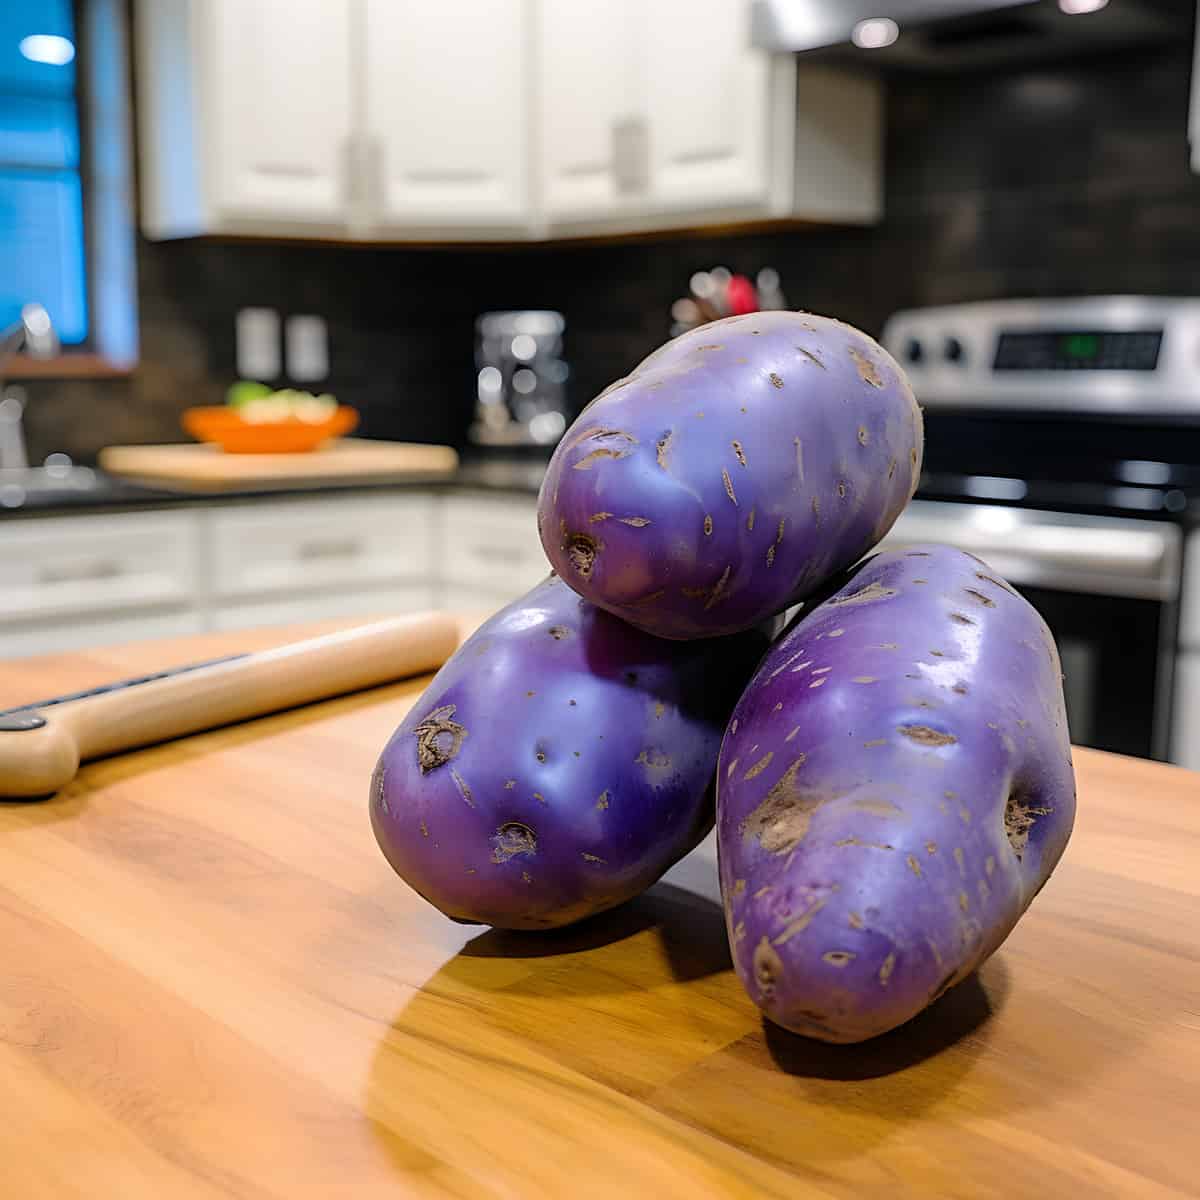 Blue Congo Potatoes on a kitchen counter